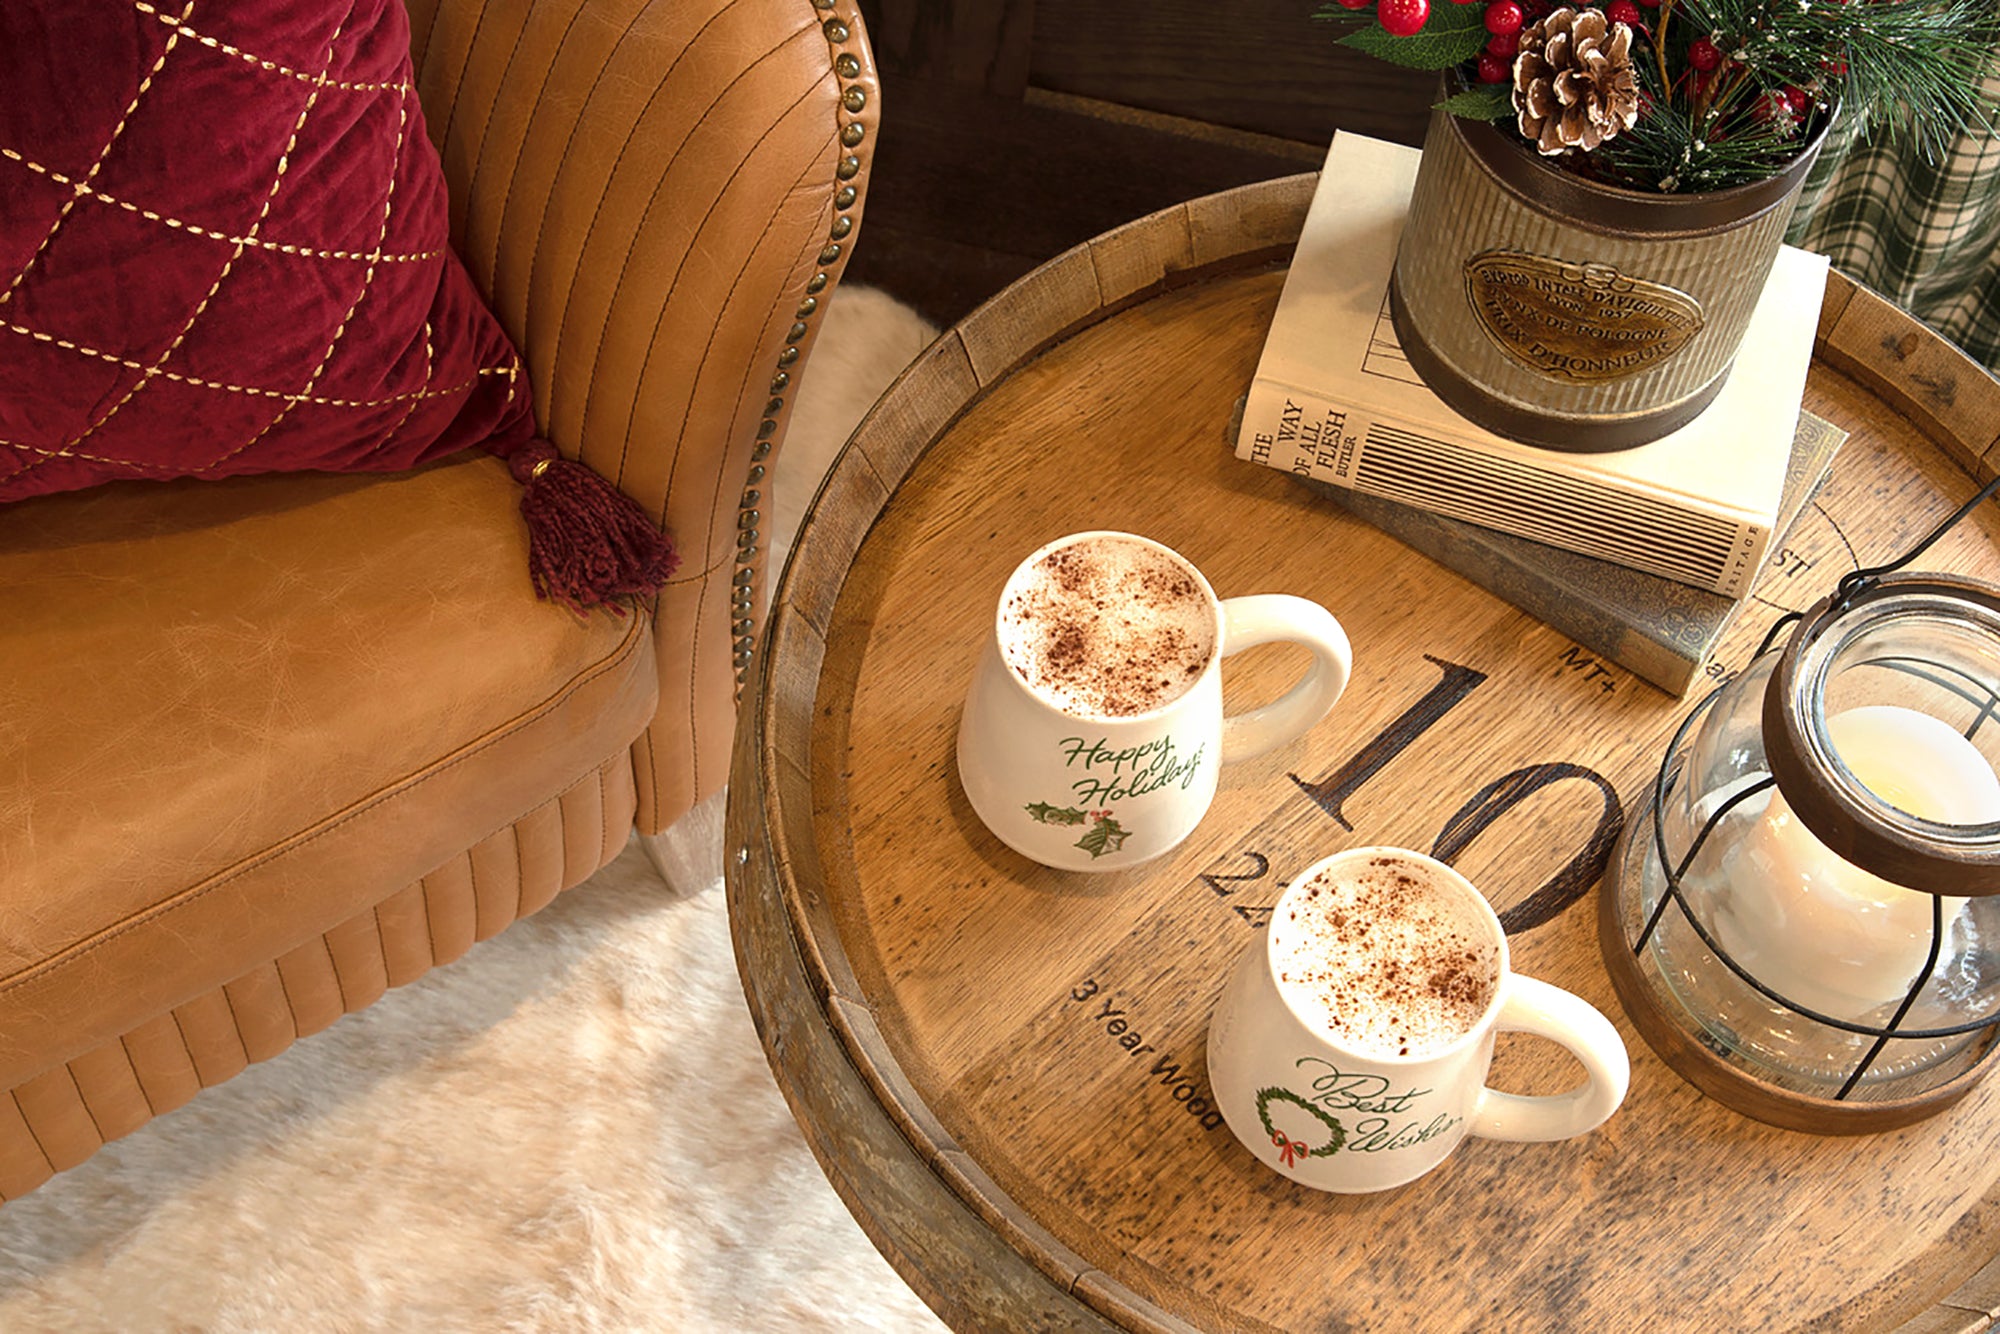 Christmas Winter Greeting Coffee Mugs Holiday Stoneware - Set of 4